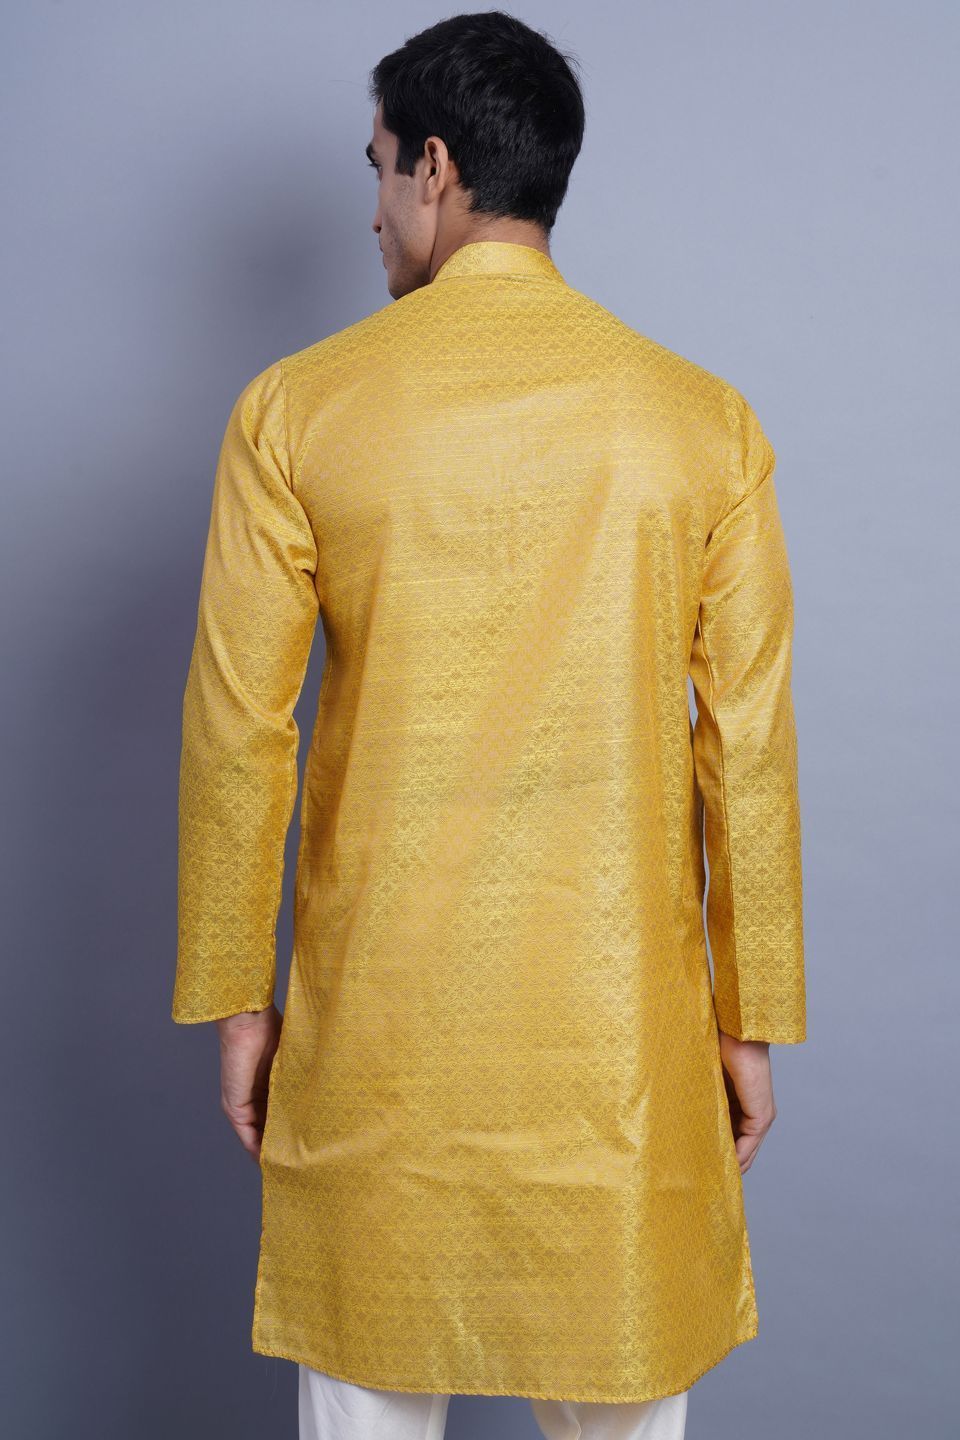 WINTAGE Men's Banarasi Art Silk Cotton Blend Festive and Casual Long Indian Kurta Comfy Sleepset Top : Yellow